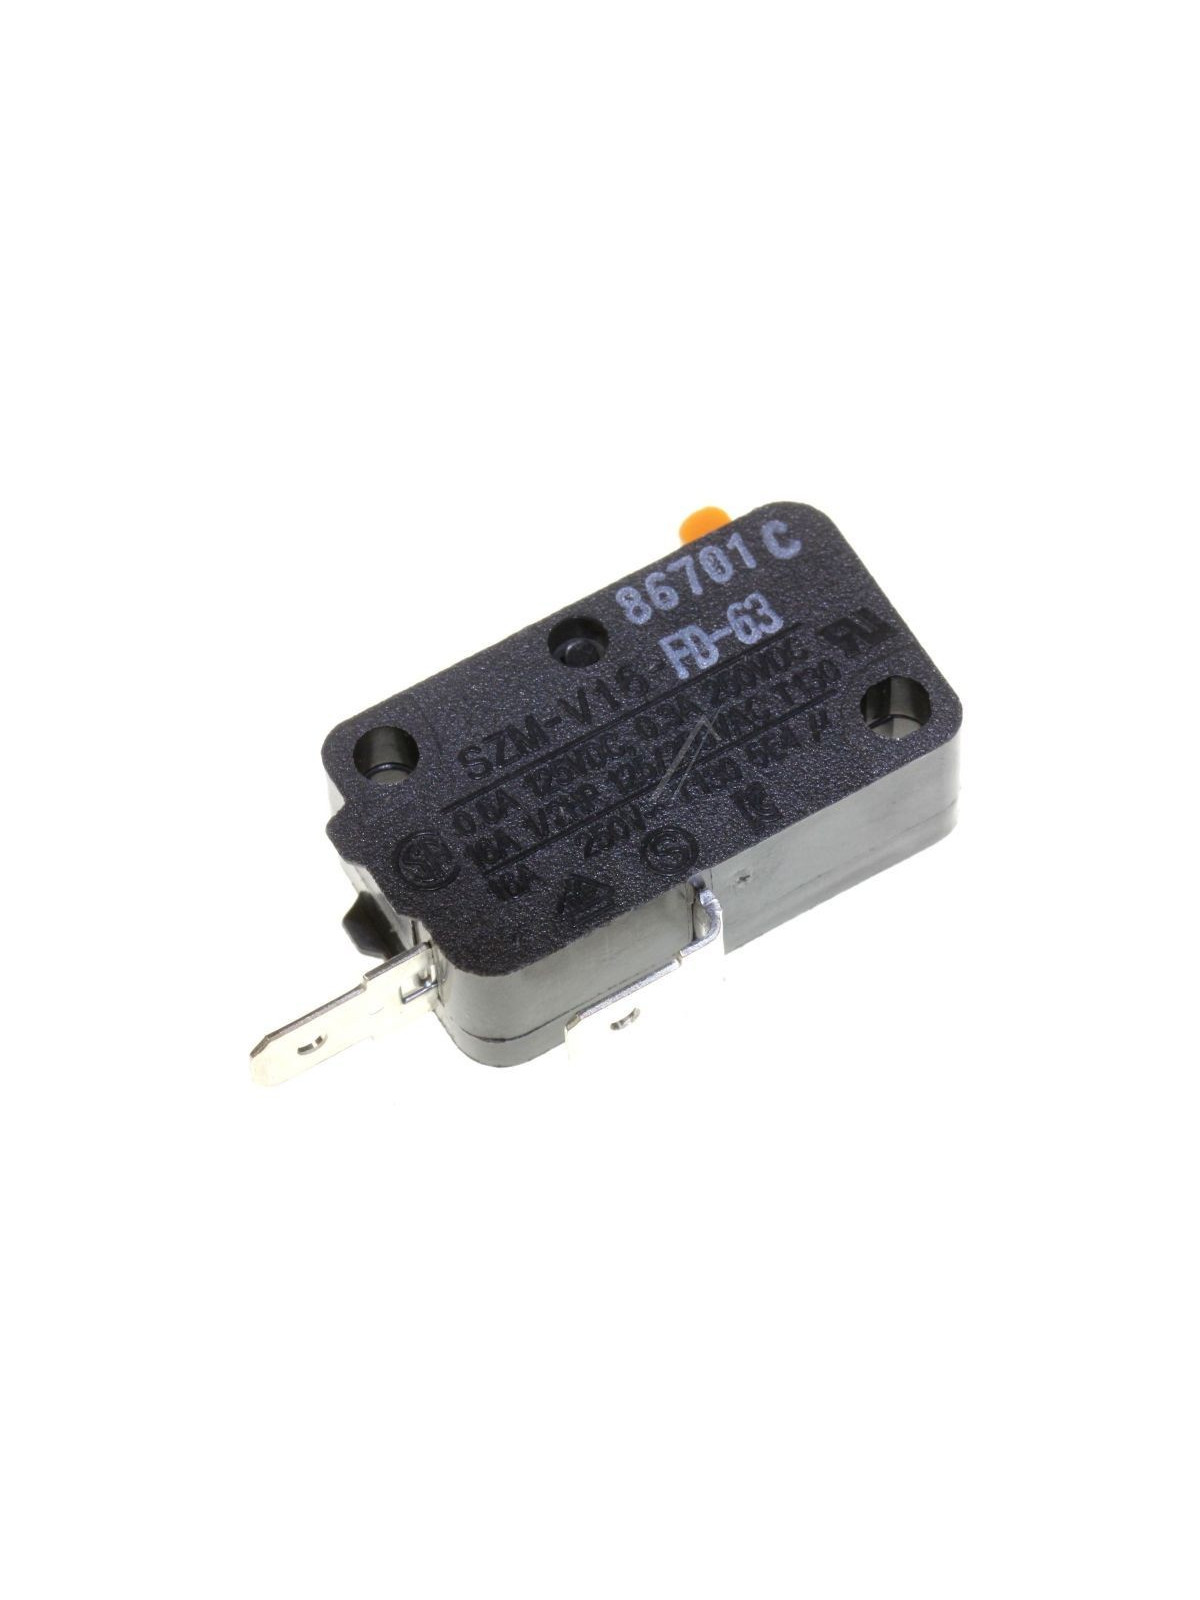 Interrupteur de porte Samsung BQ1Q / CE107B - Micro-ondes